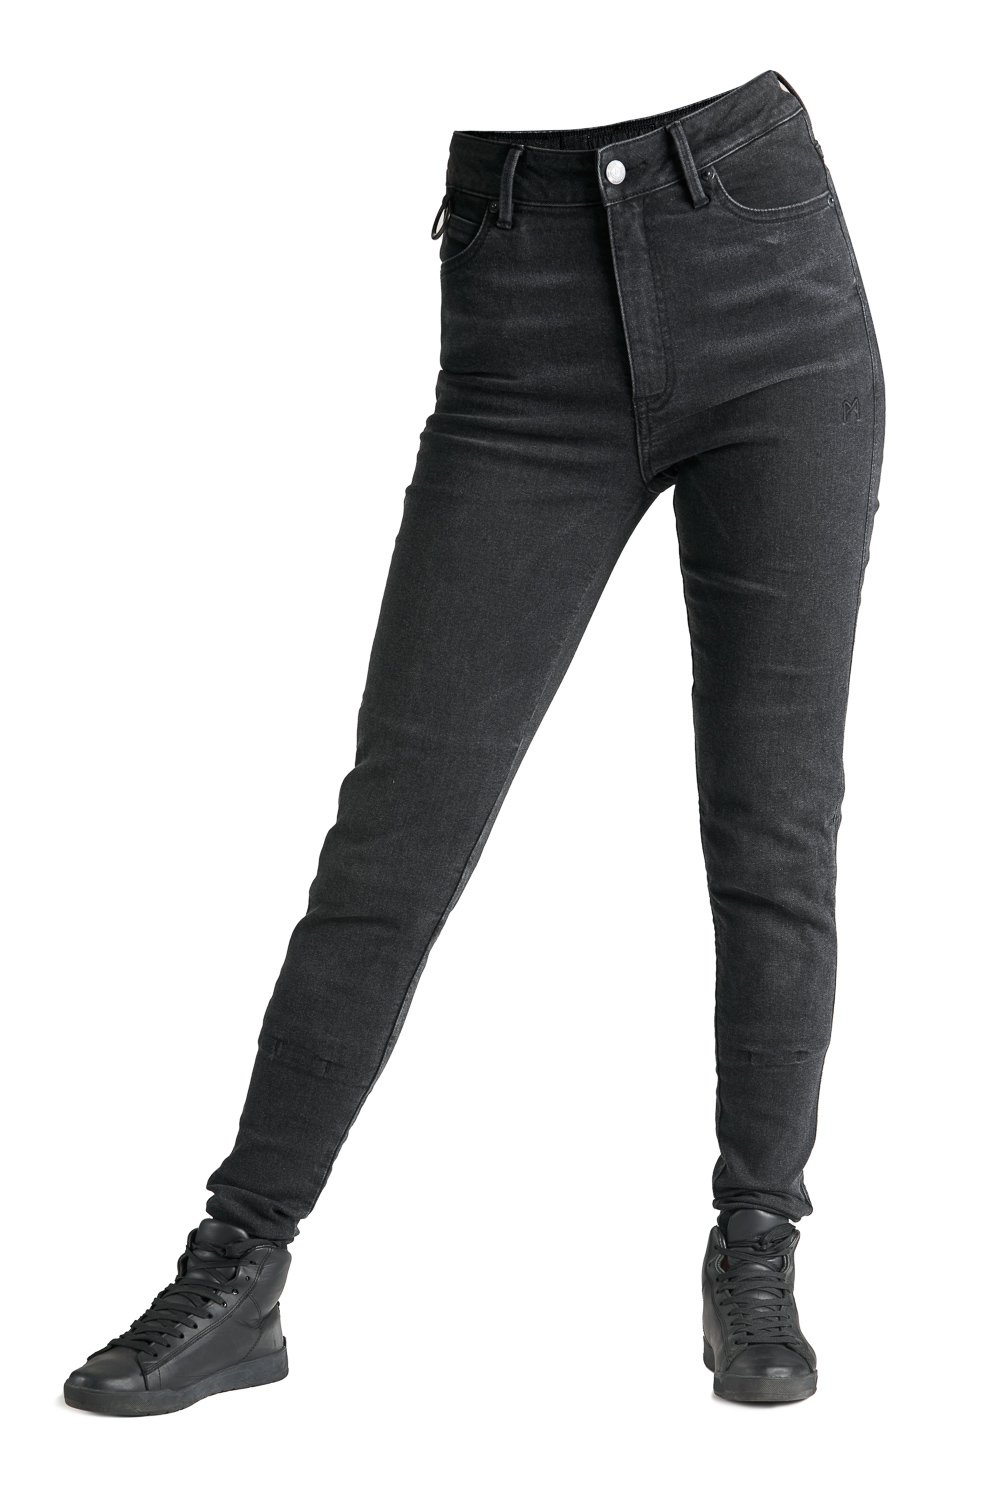 Image of EU Pando Moto Kusari Cor 01 Women Skinny-Fit Cordura Pantalon Taille W32/L32